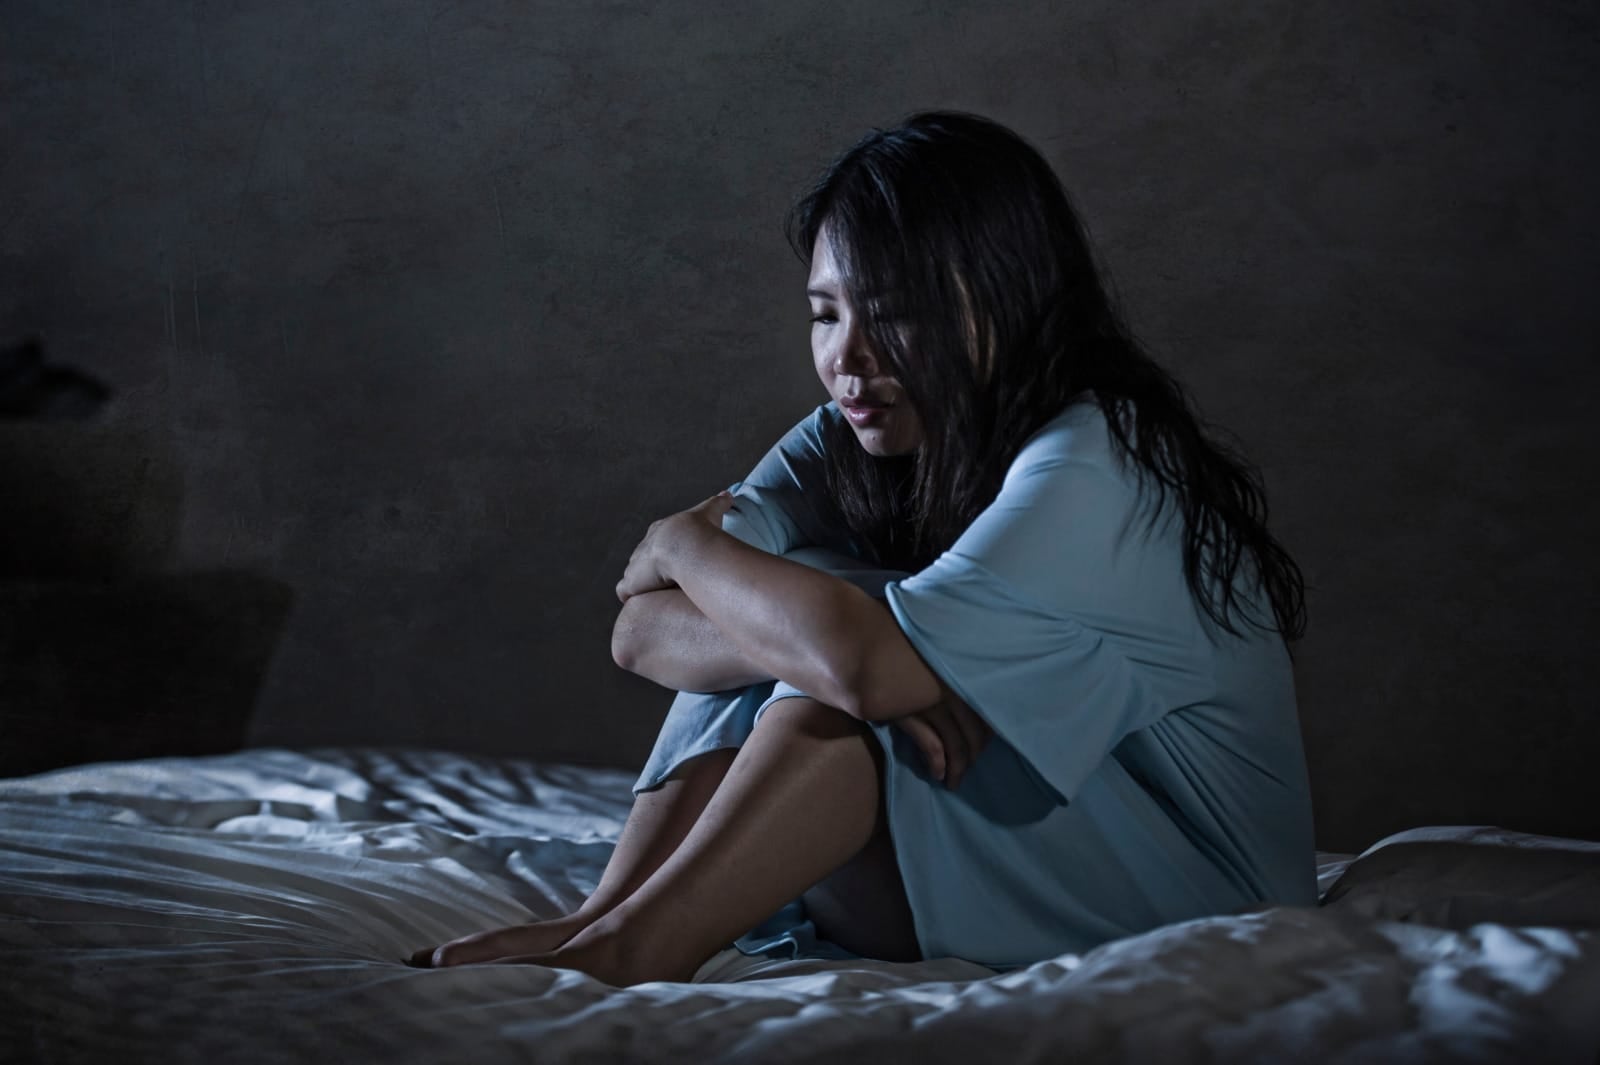 asian young lady depressed sad sitting on bed dark night nightmare 123rf